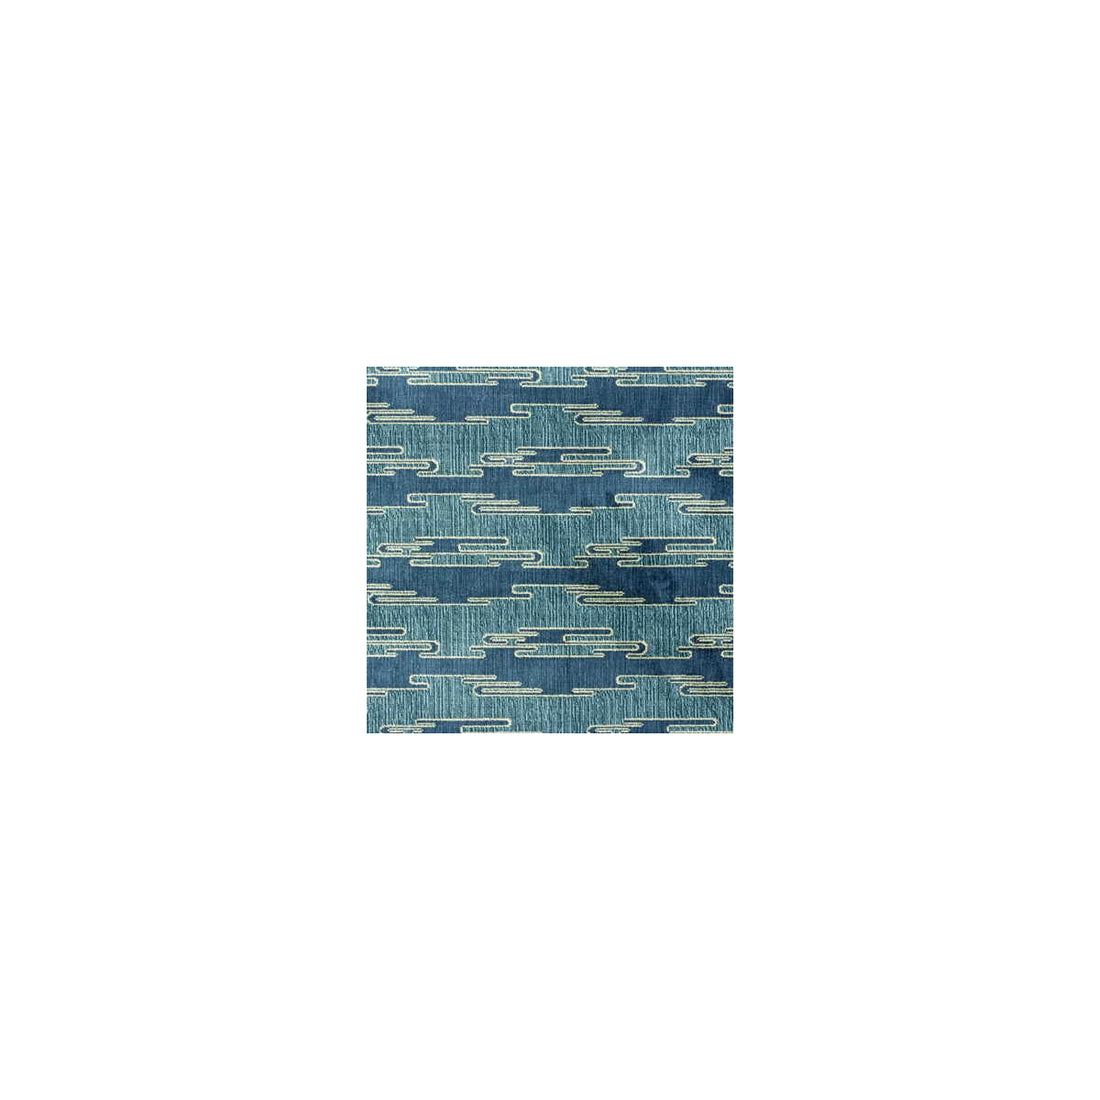 Sora Velvet fabric in aqua/blue color - pattern SORA VELVET.AQUA/BLUE.0 - by Lee Jofa Modern in the Kelly Wearstler collection